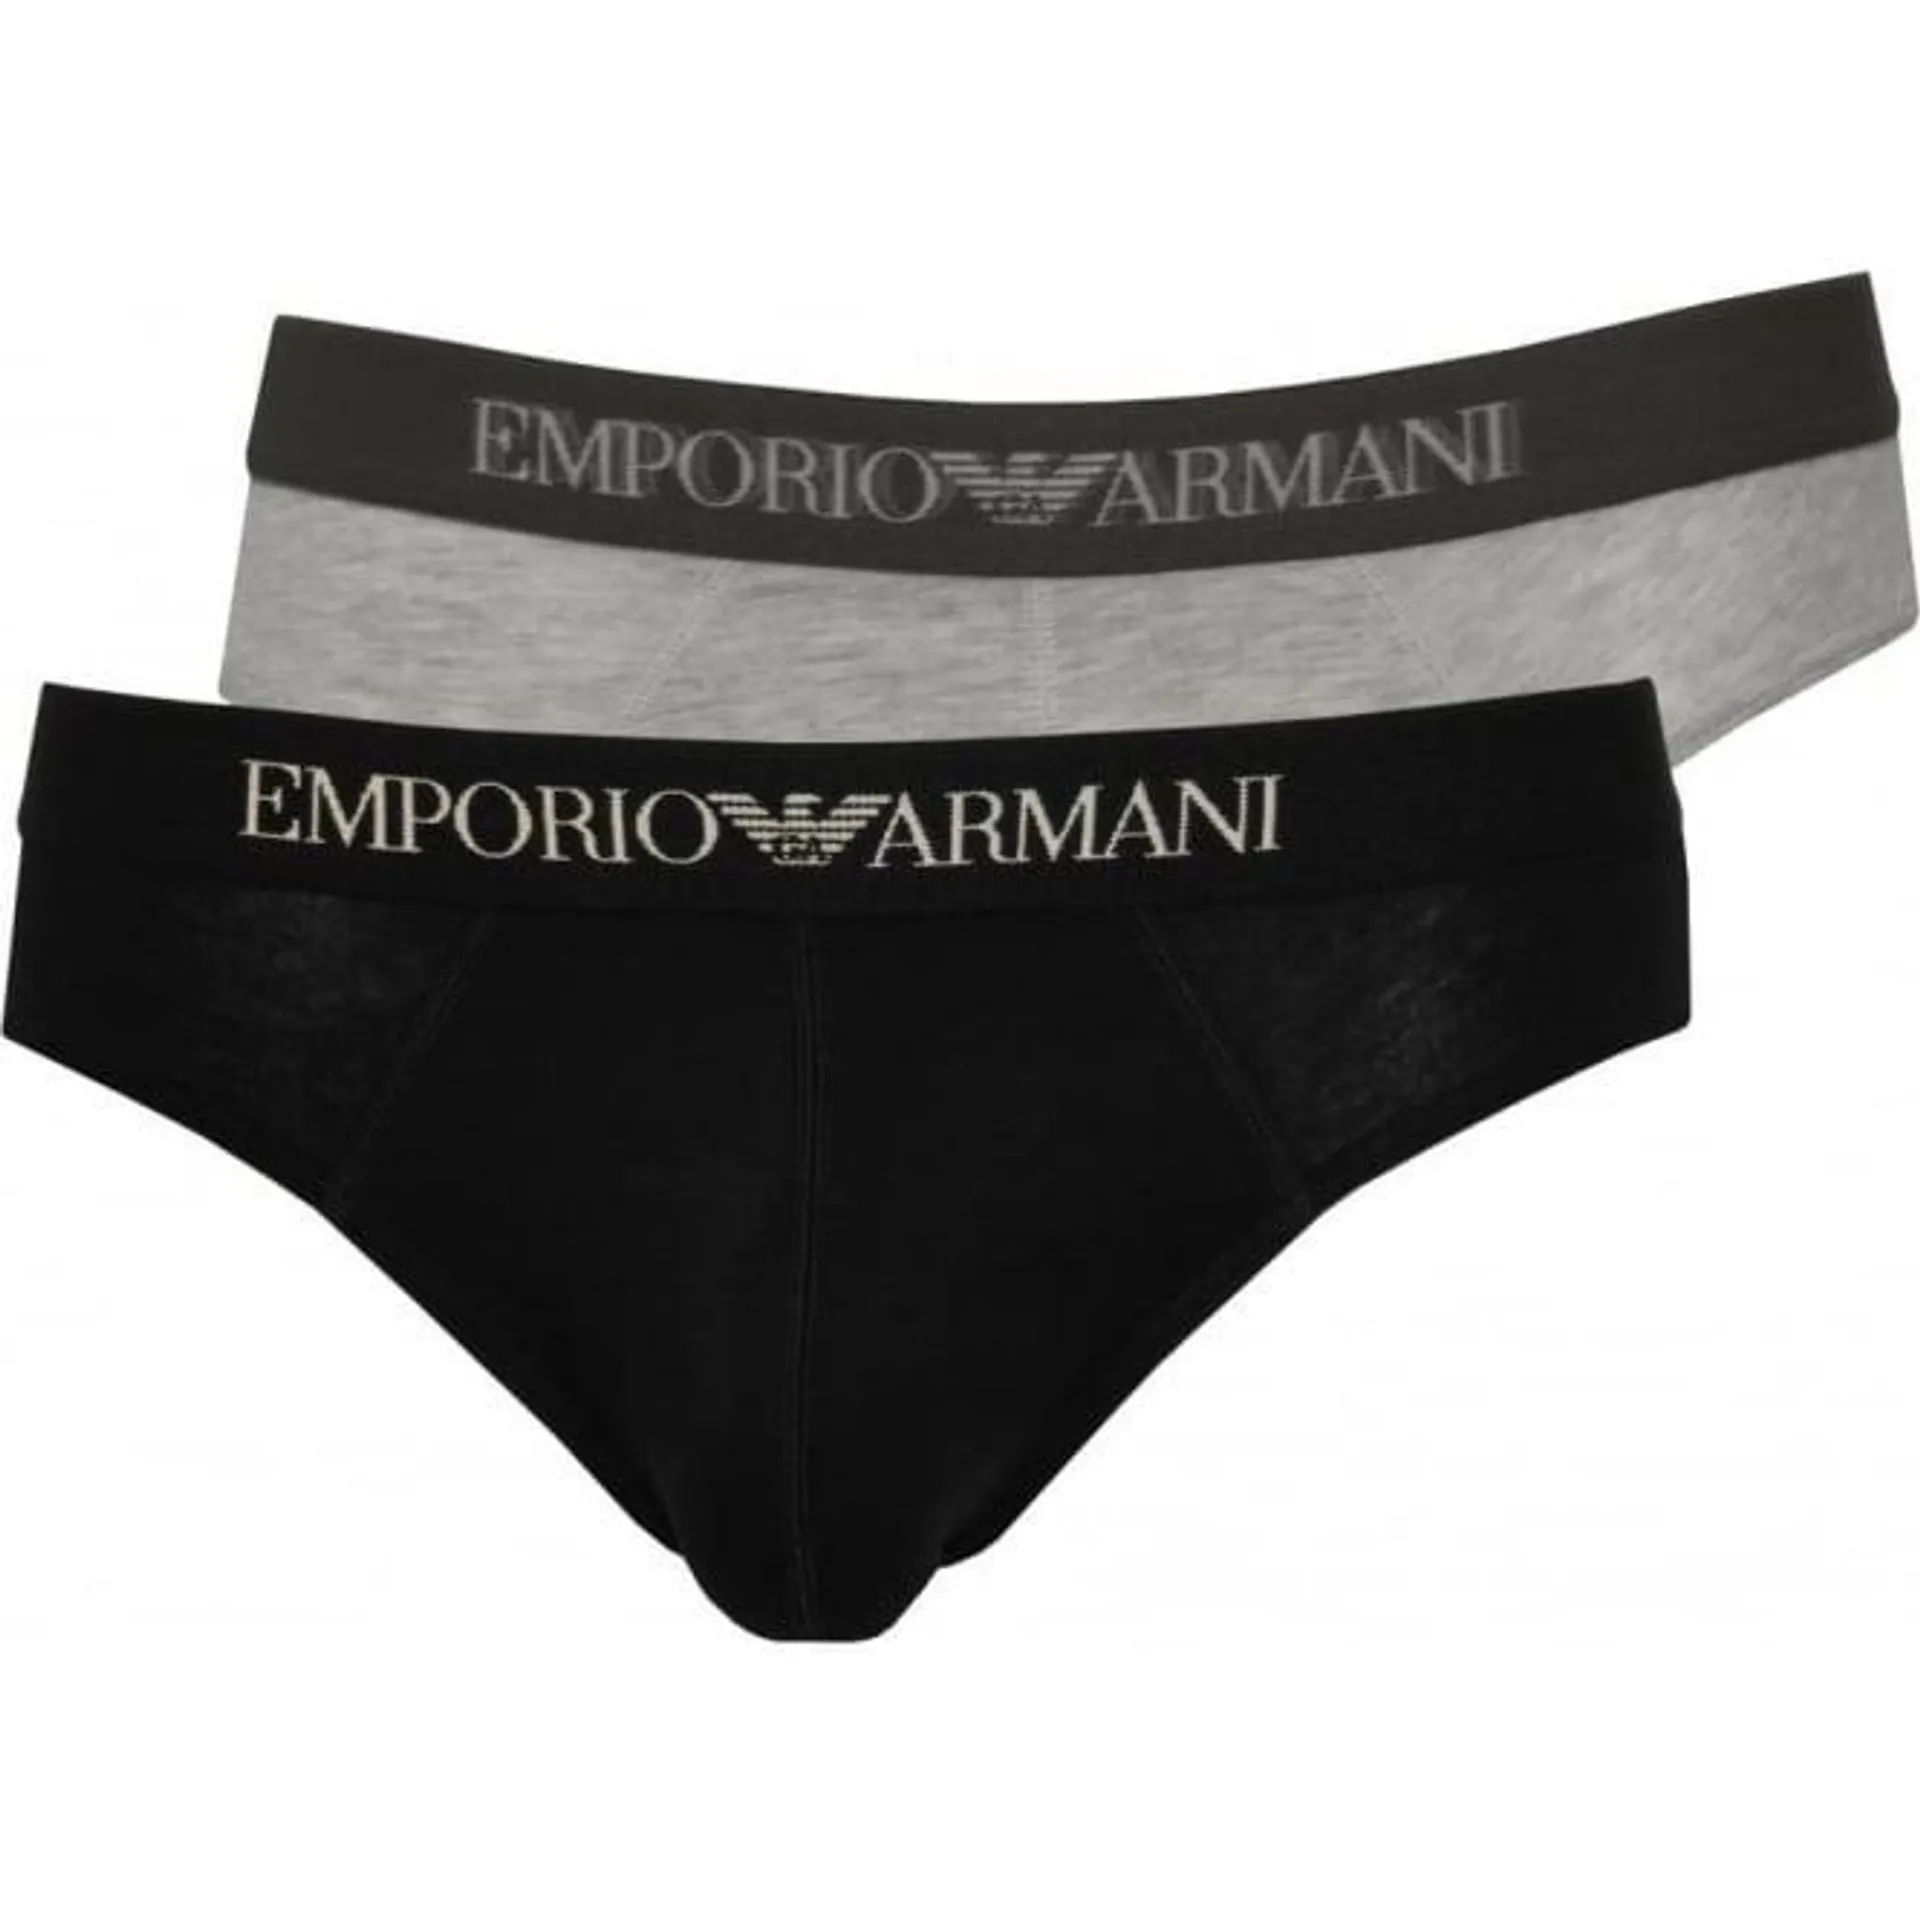 Emporio Armani 2-Pack Pure Cotton Briefs, Black/Grey